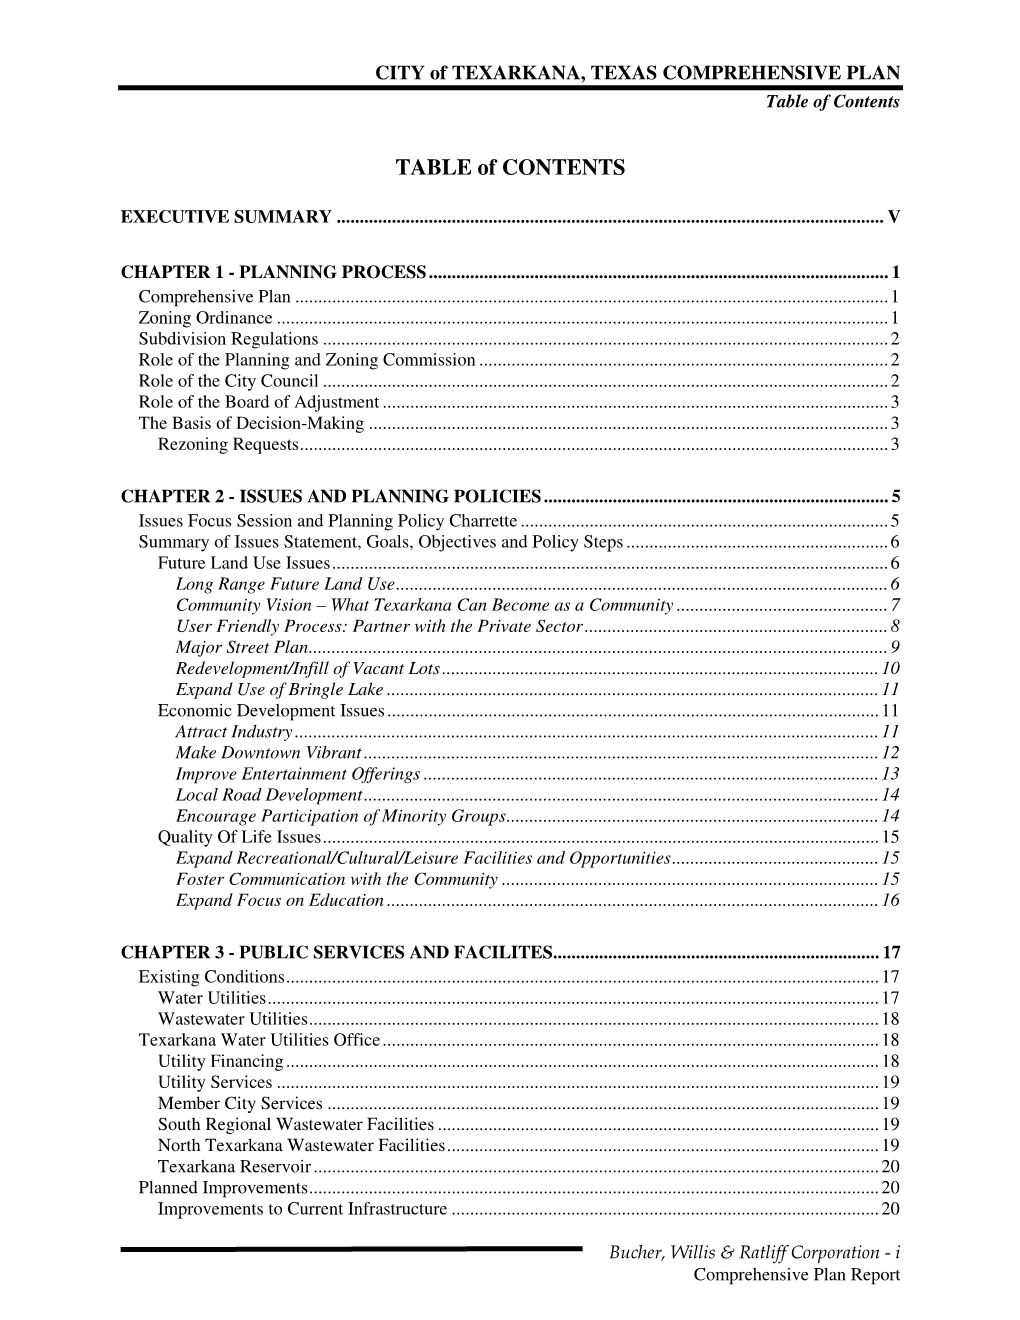 Table of Contents Bucher, Willis & Ratliff Corporation